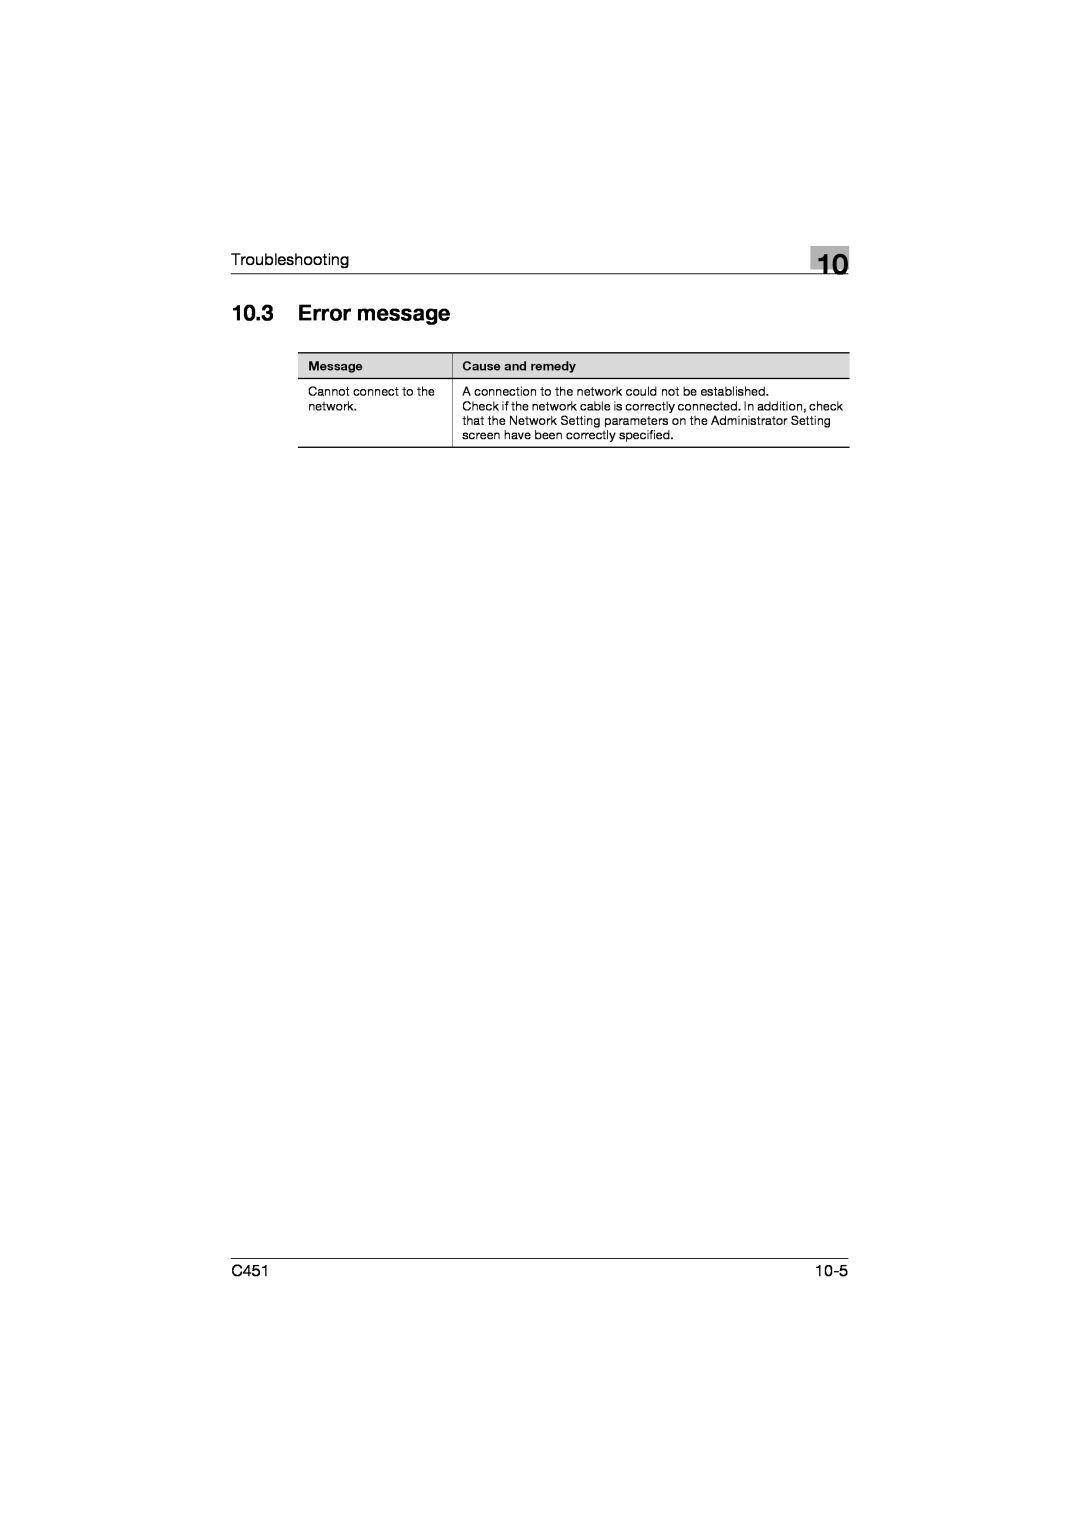 Konica Minolta C451 manual 10.3Error message, Troubleshooting, 10-5 